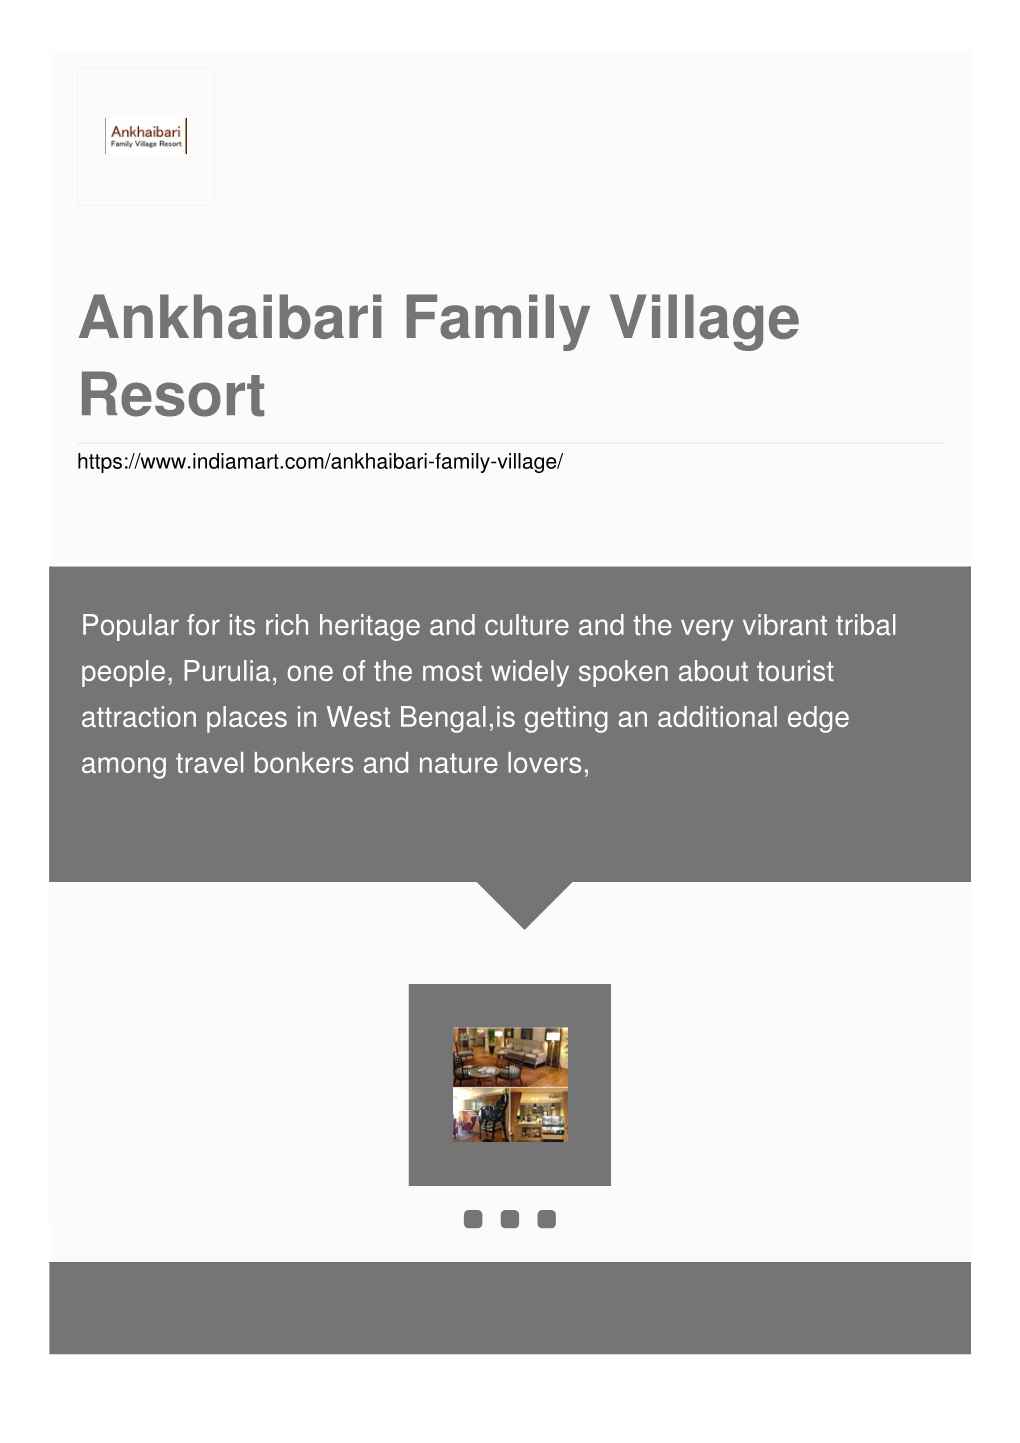 Ankhaibari Family Village Resort